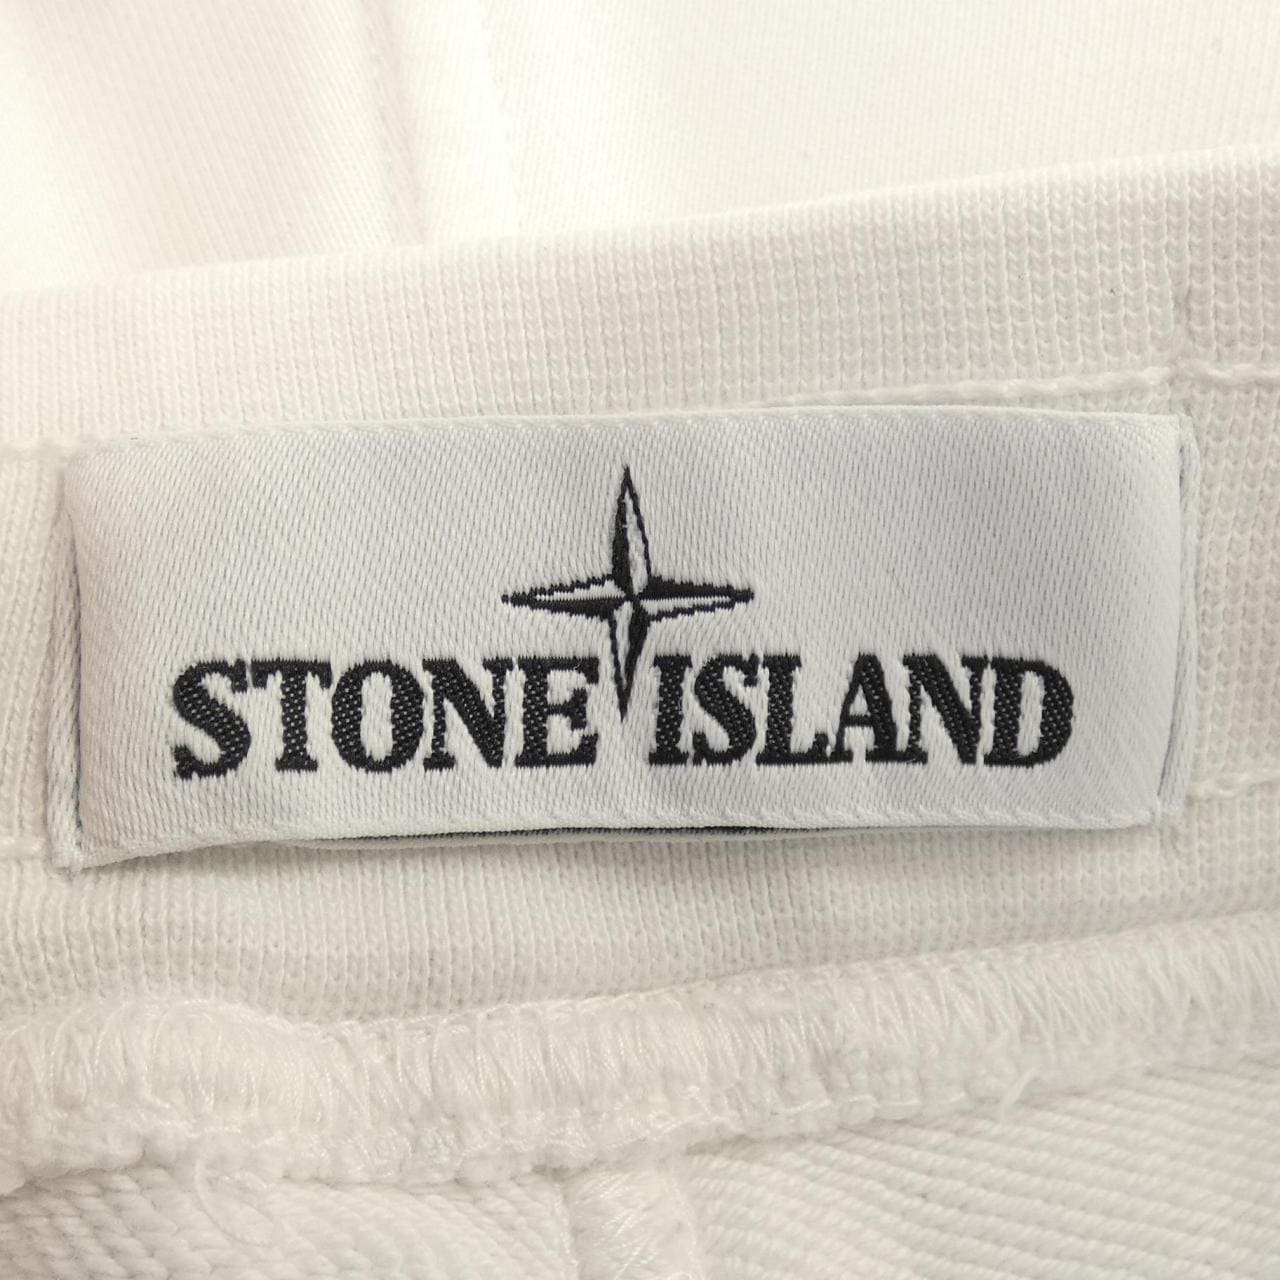 石岛STONE ISLAND裤子